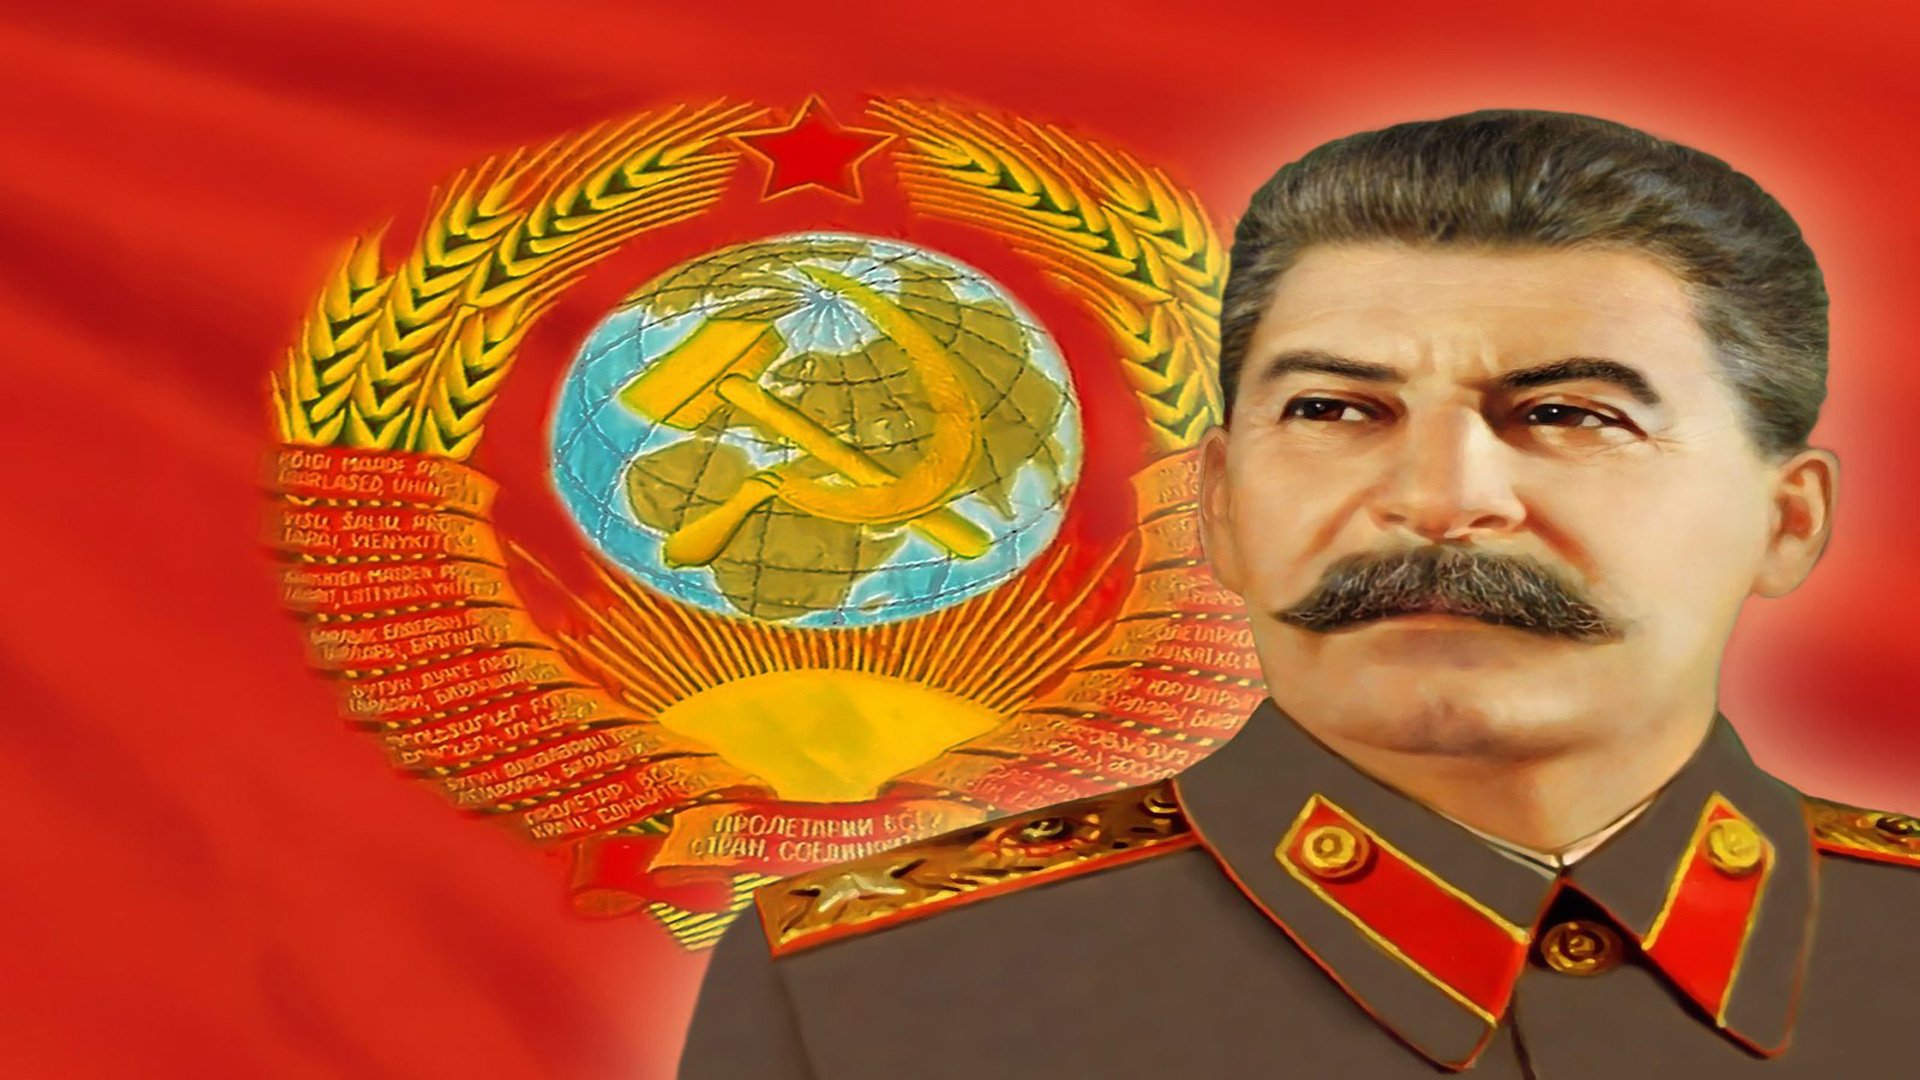 Сталин на фоне флага ссср - обои на рабочий стол